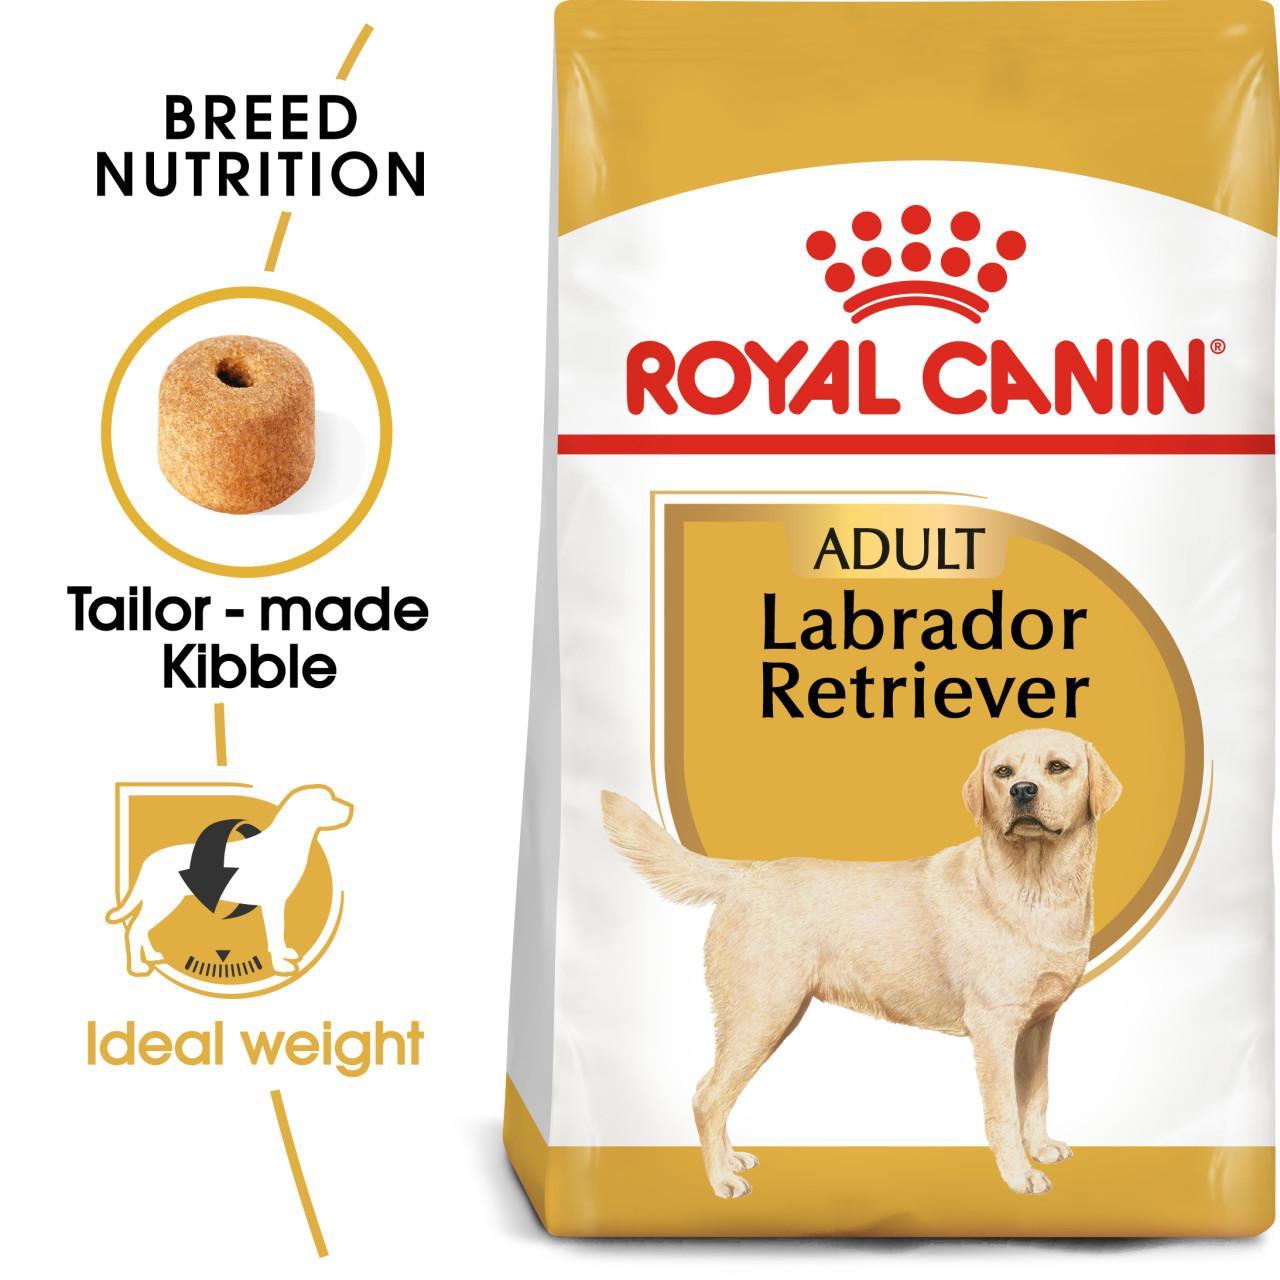 An image of Royal Canin Labrador Retriever Adult